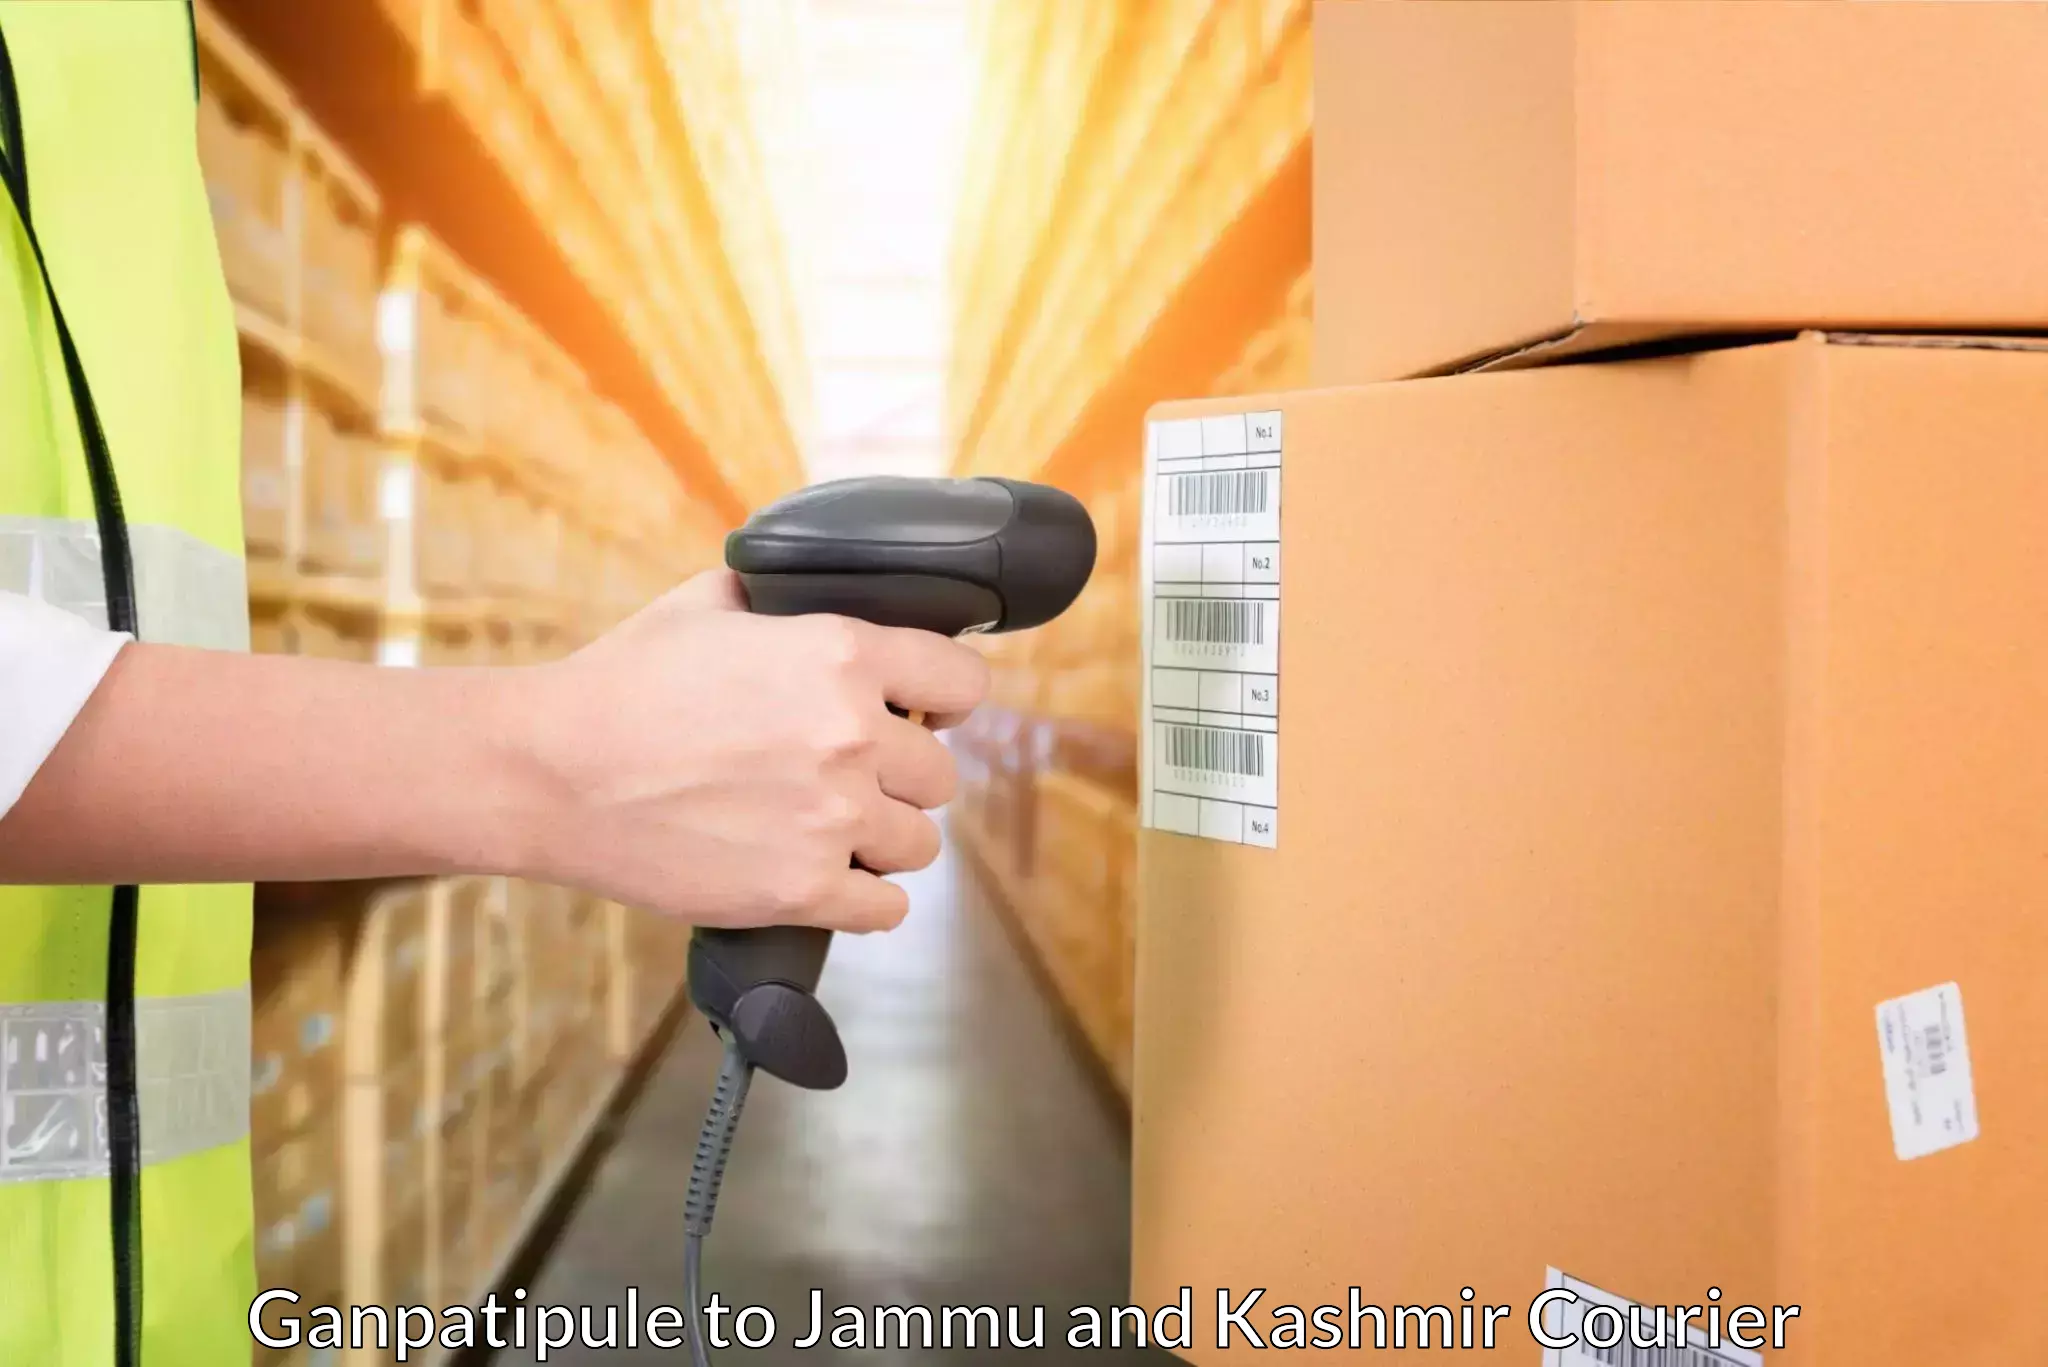 Express delivery capabilities Ganpatipule to Baramulla